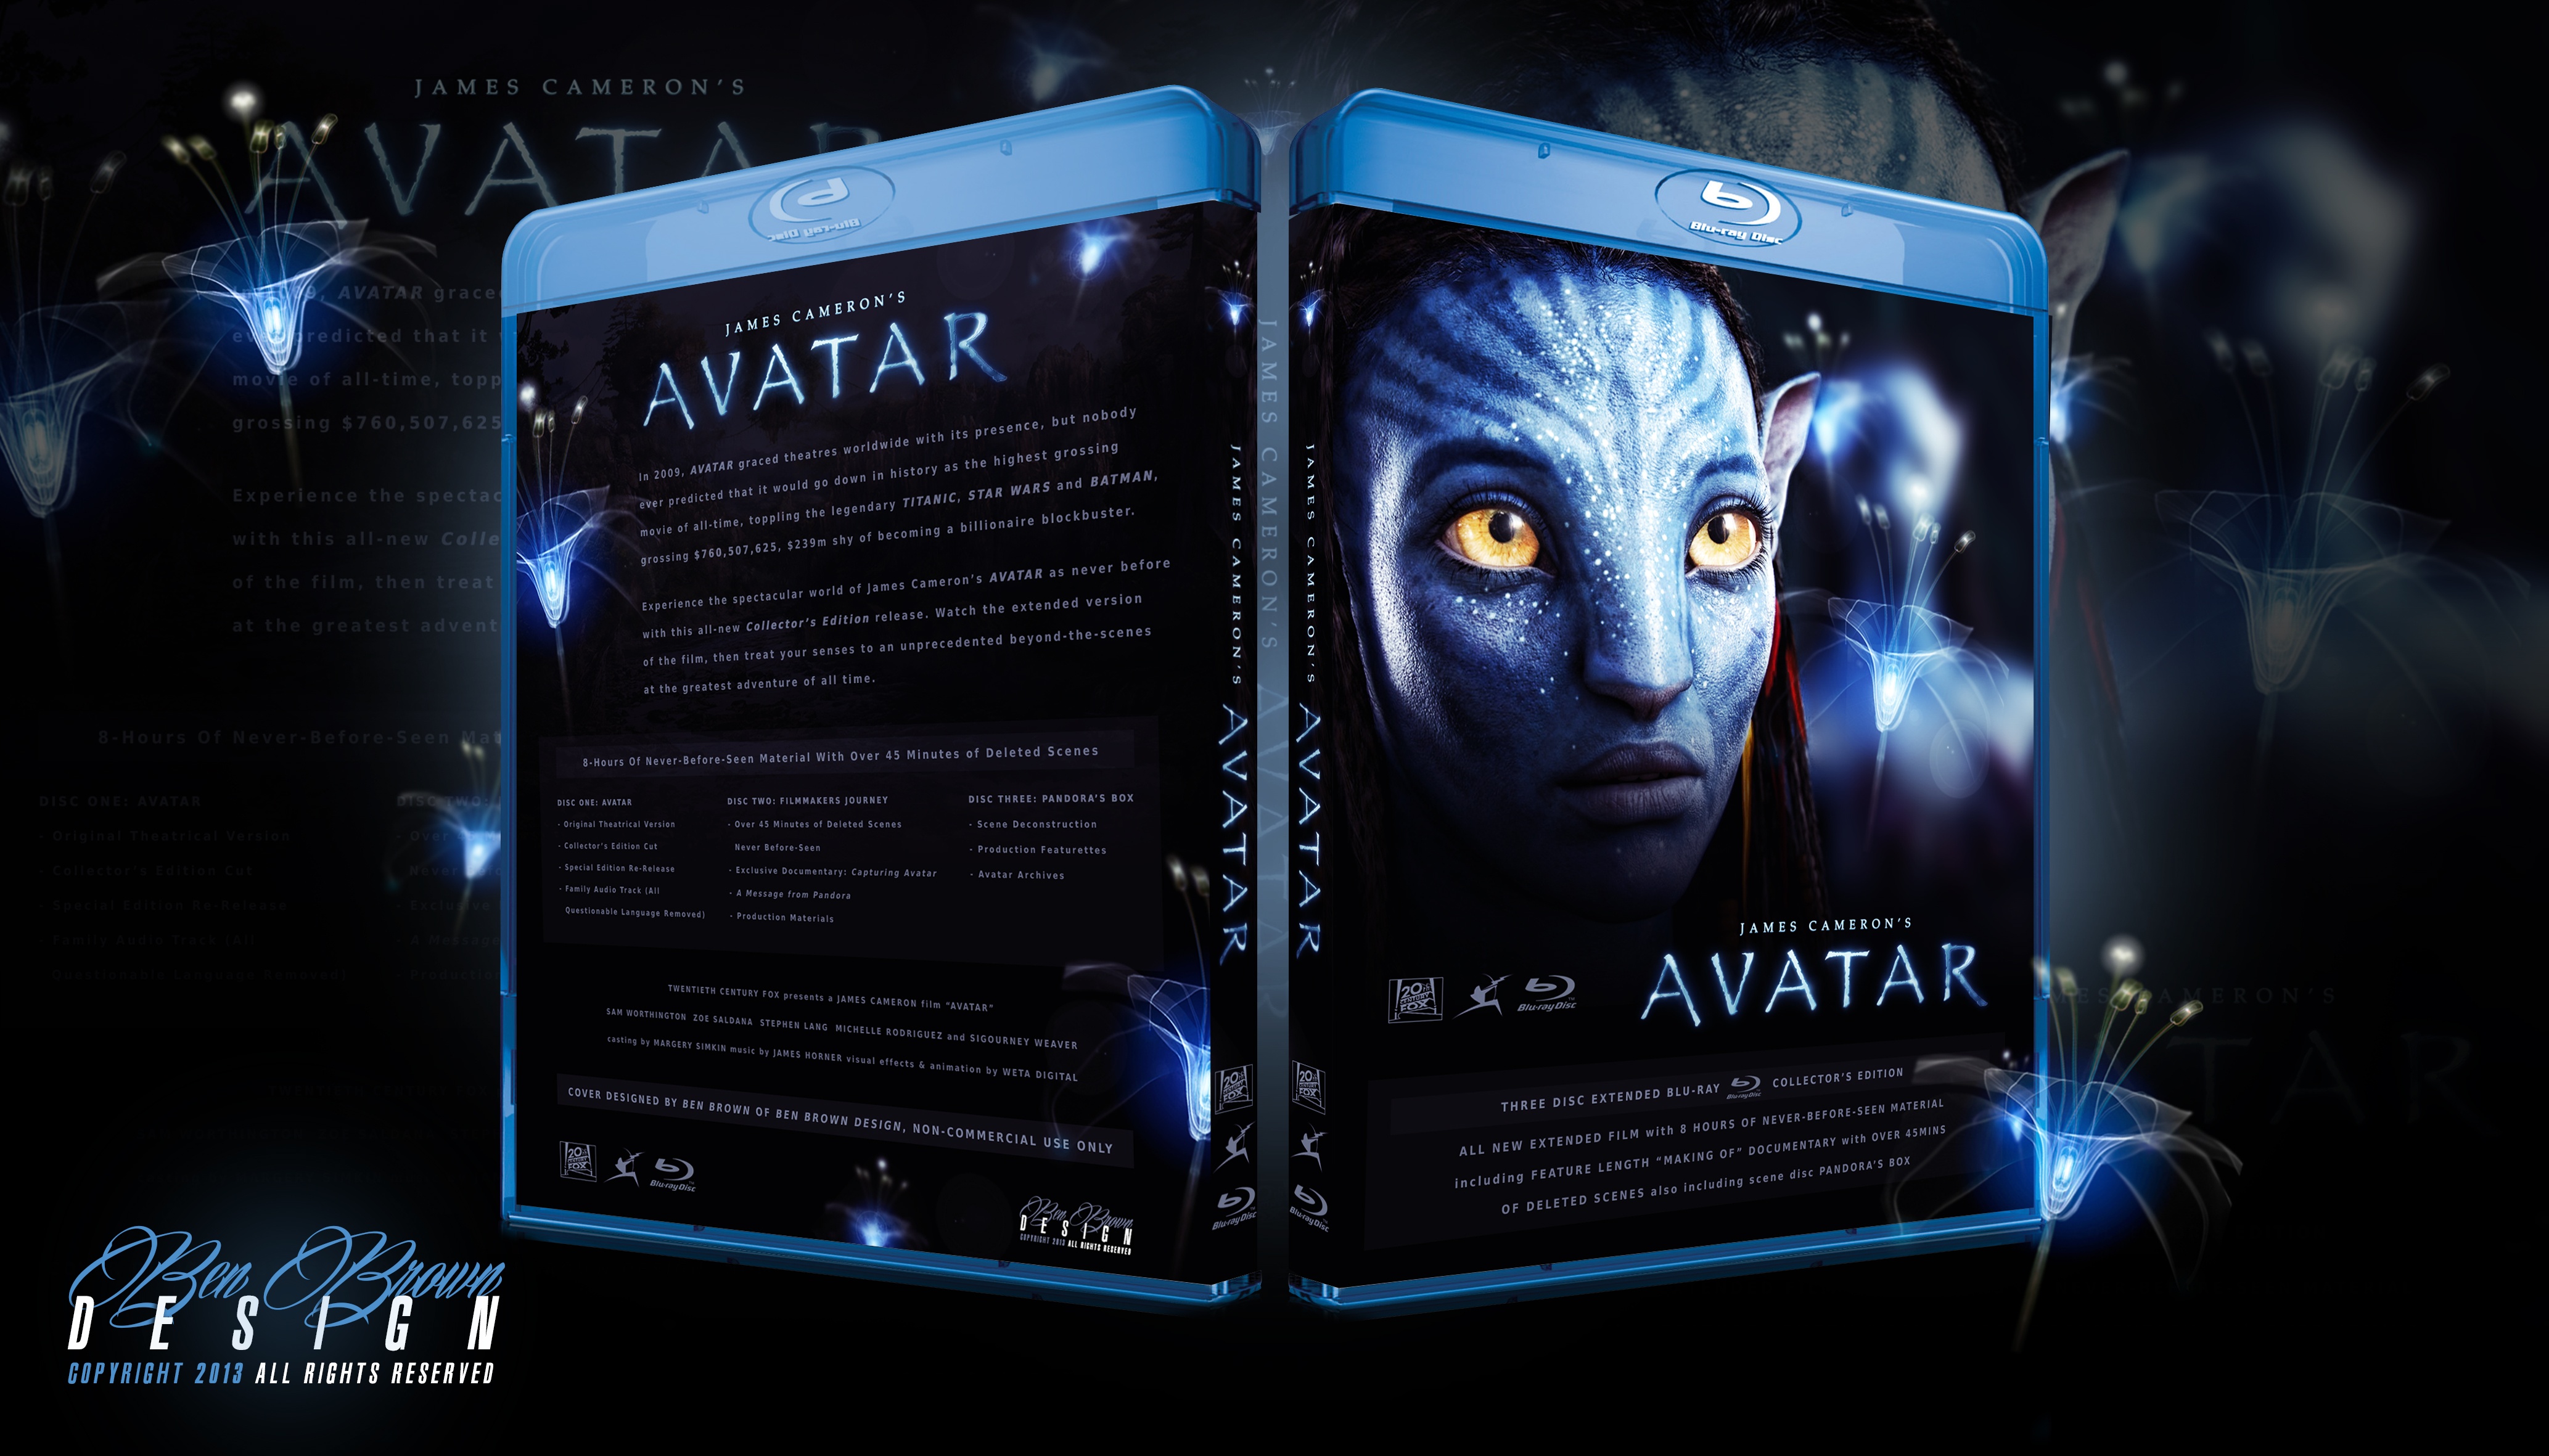 James Cameron's Avatar box cover